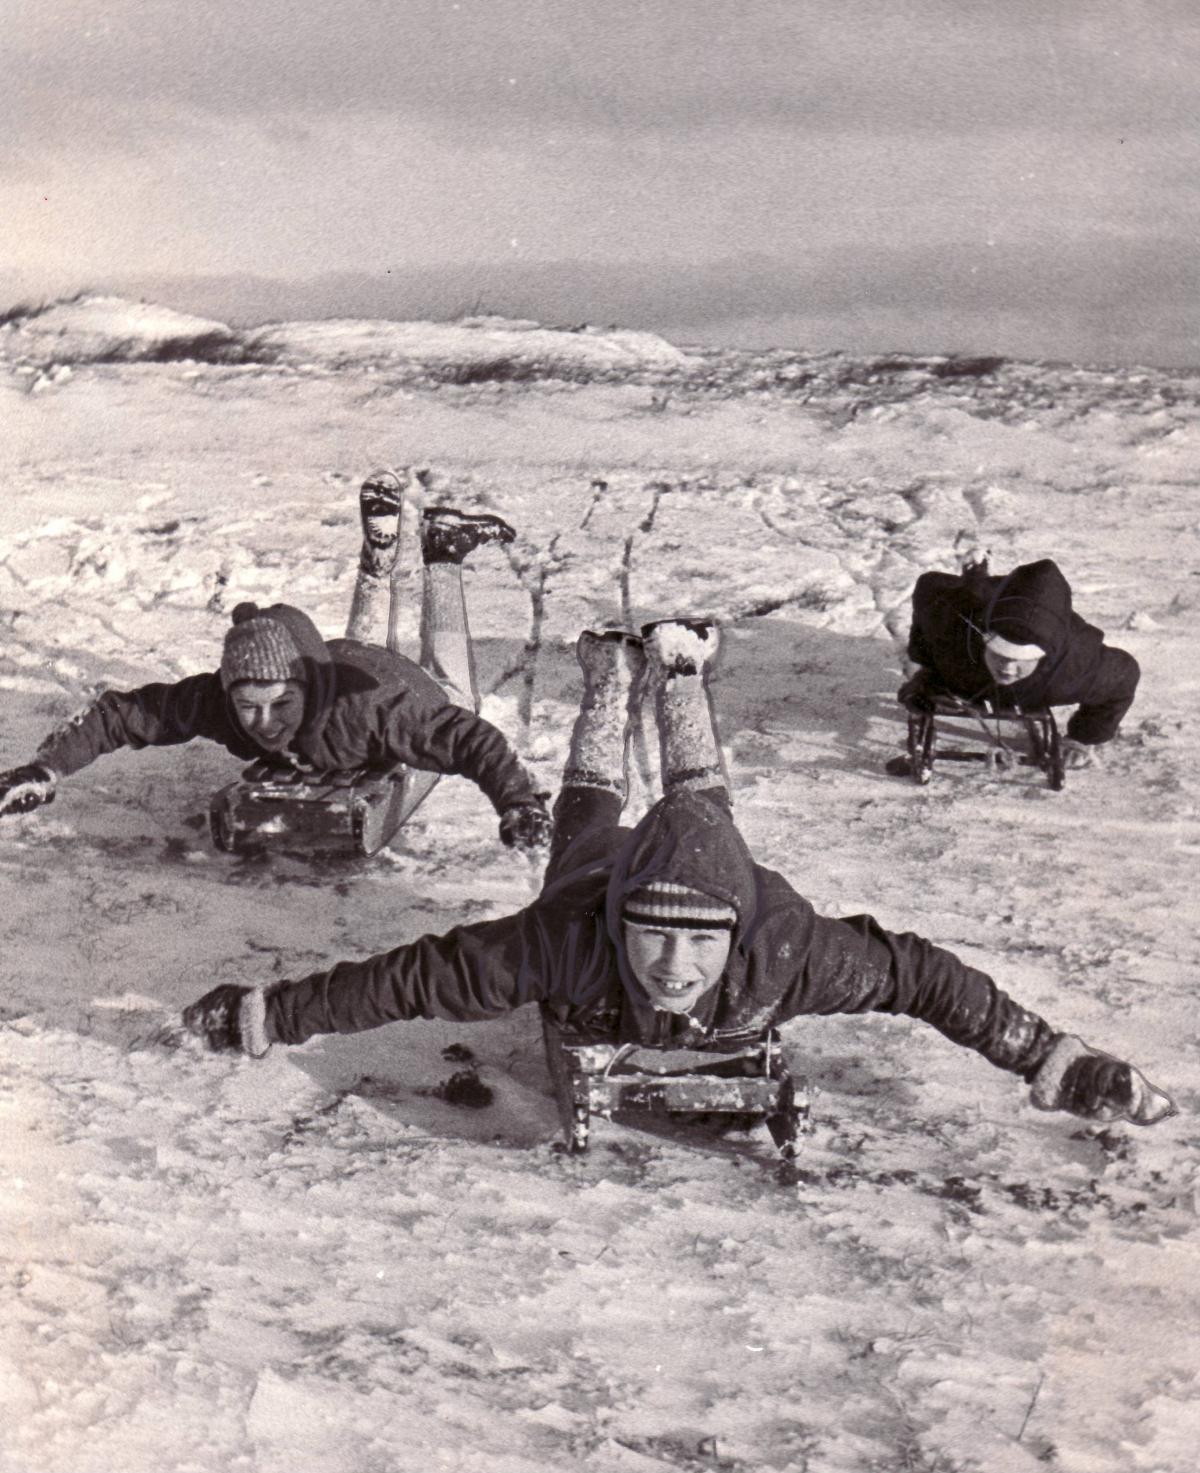 People have fun in the snow in 1970 on Baildon Moor